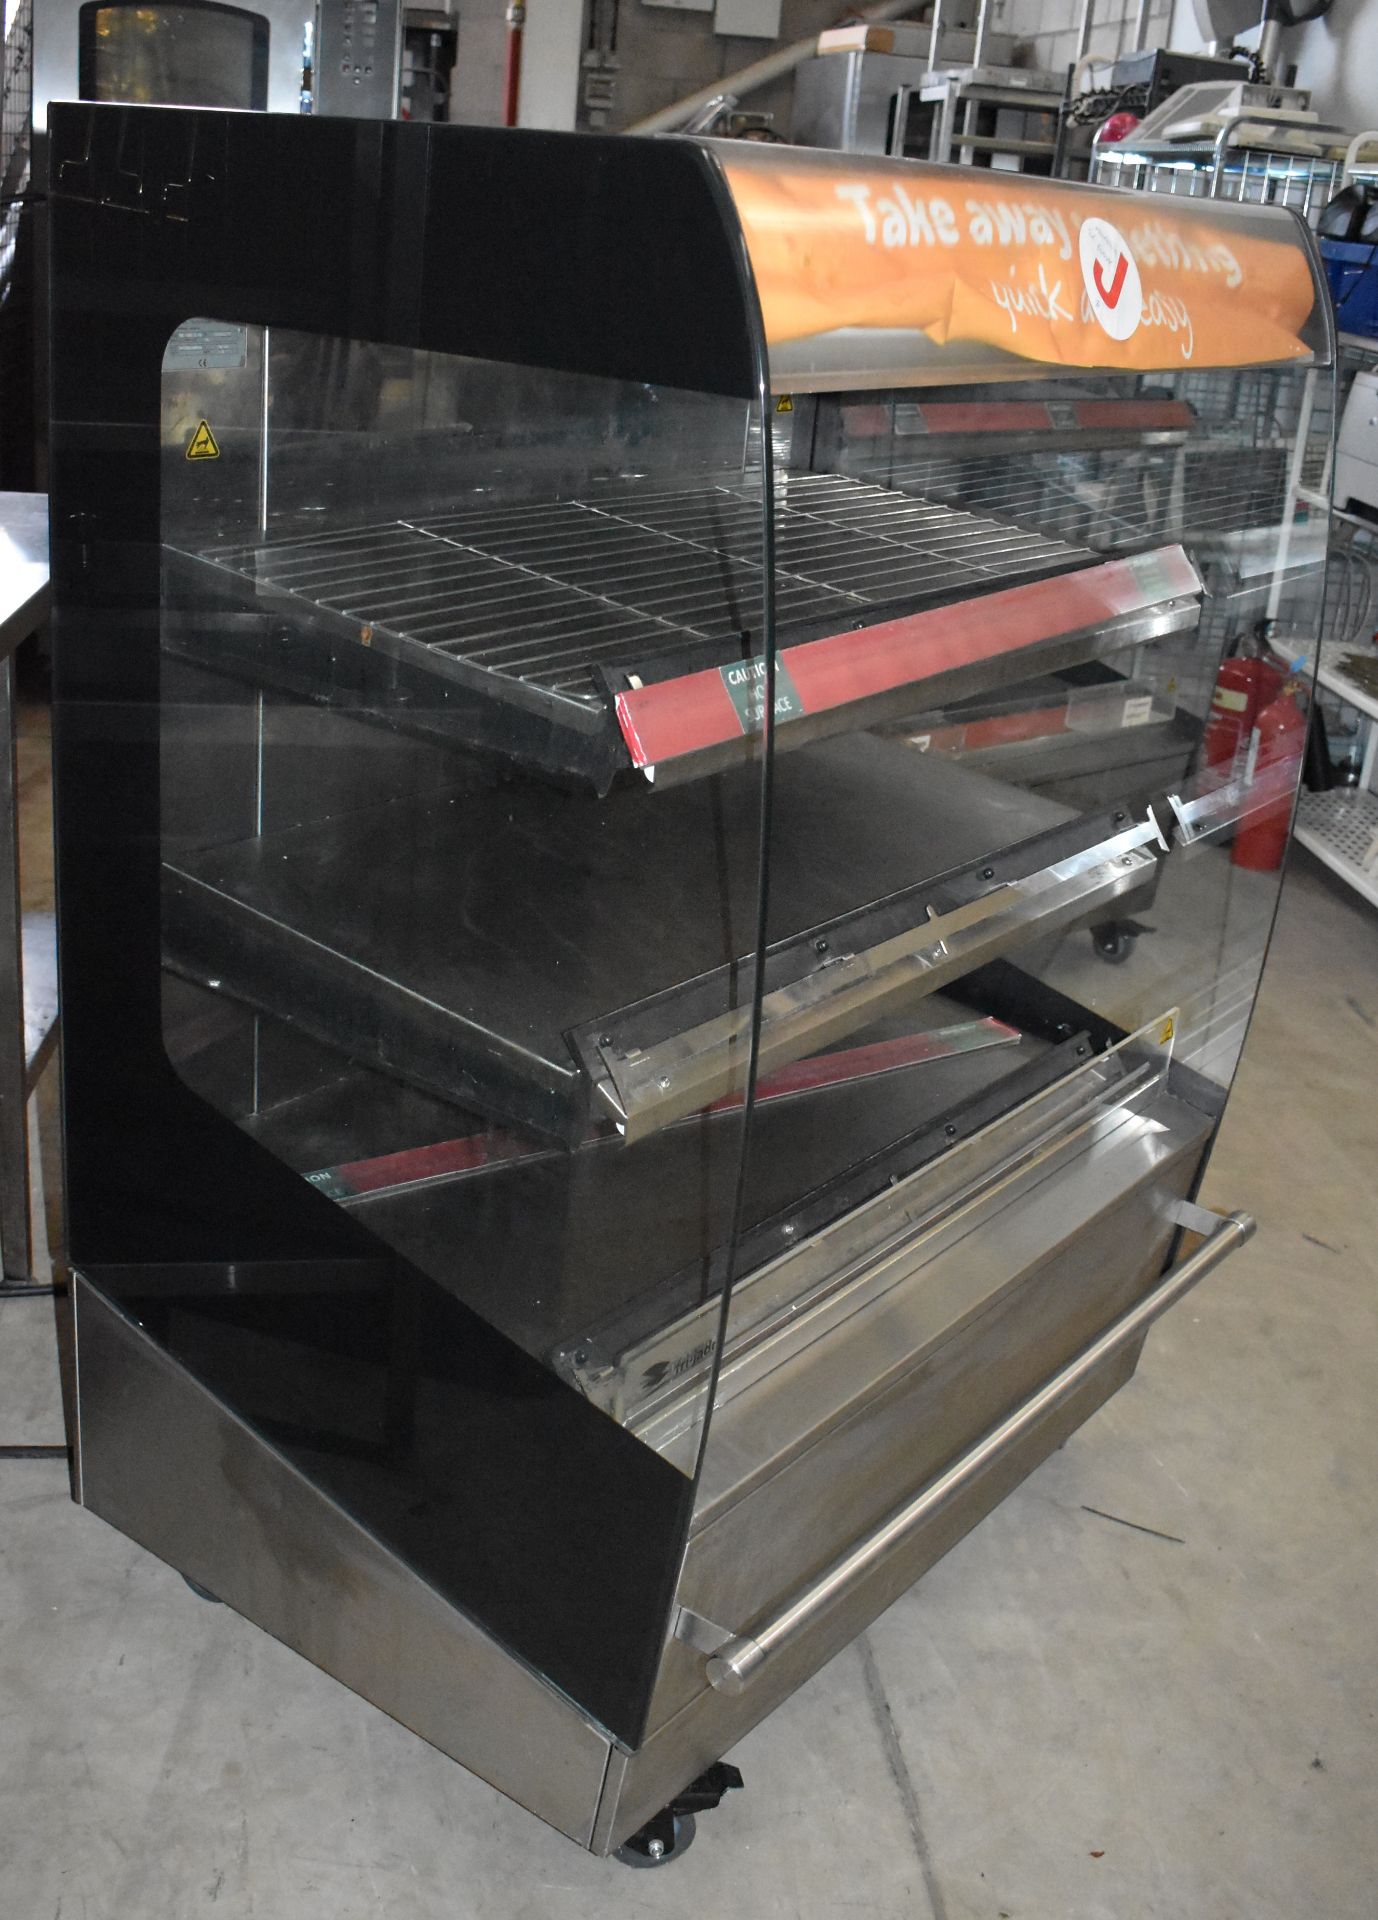 1 x Fri-Jado Three Tier Multi Deck Hot Food Warmer Heated Display Unit - Contemporary Modern - Image 6 of 9